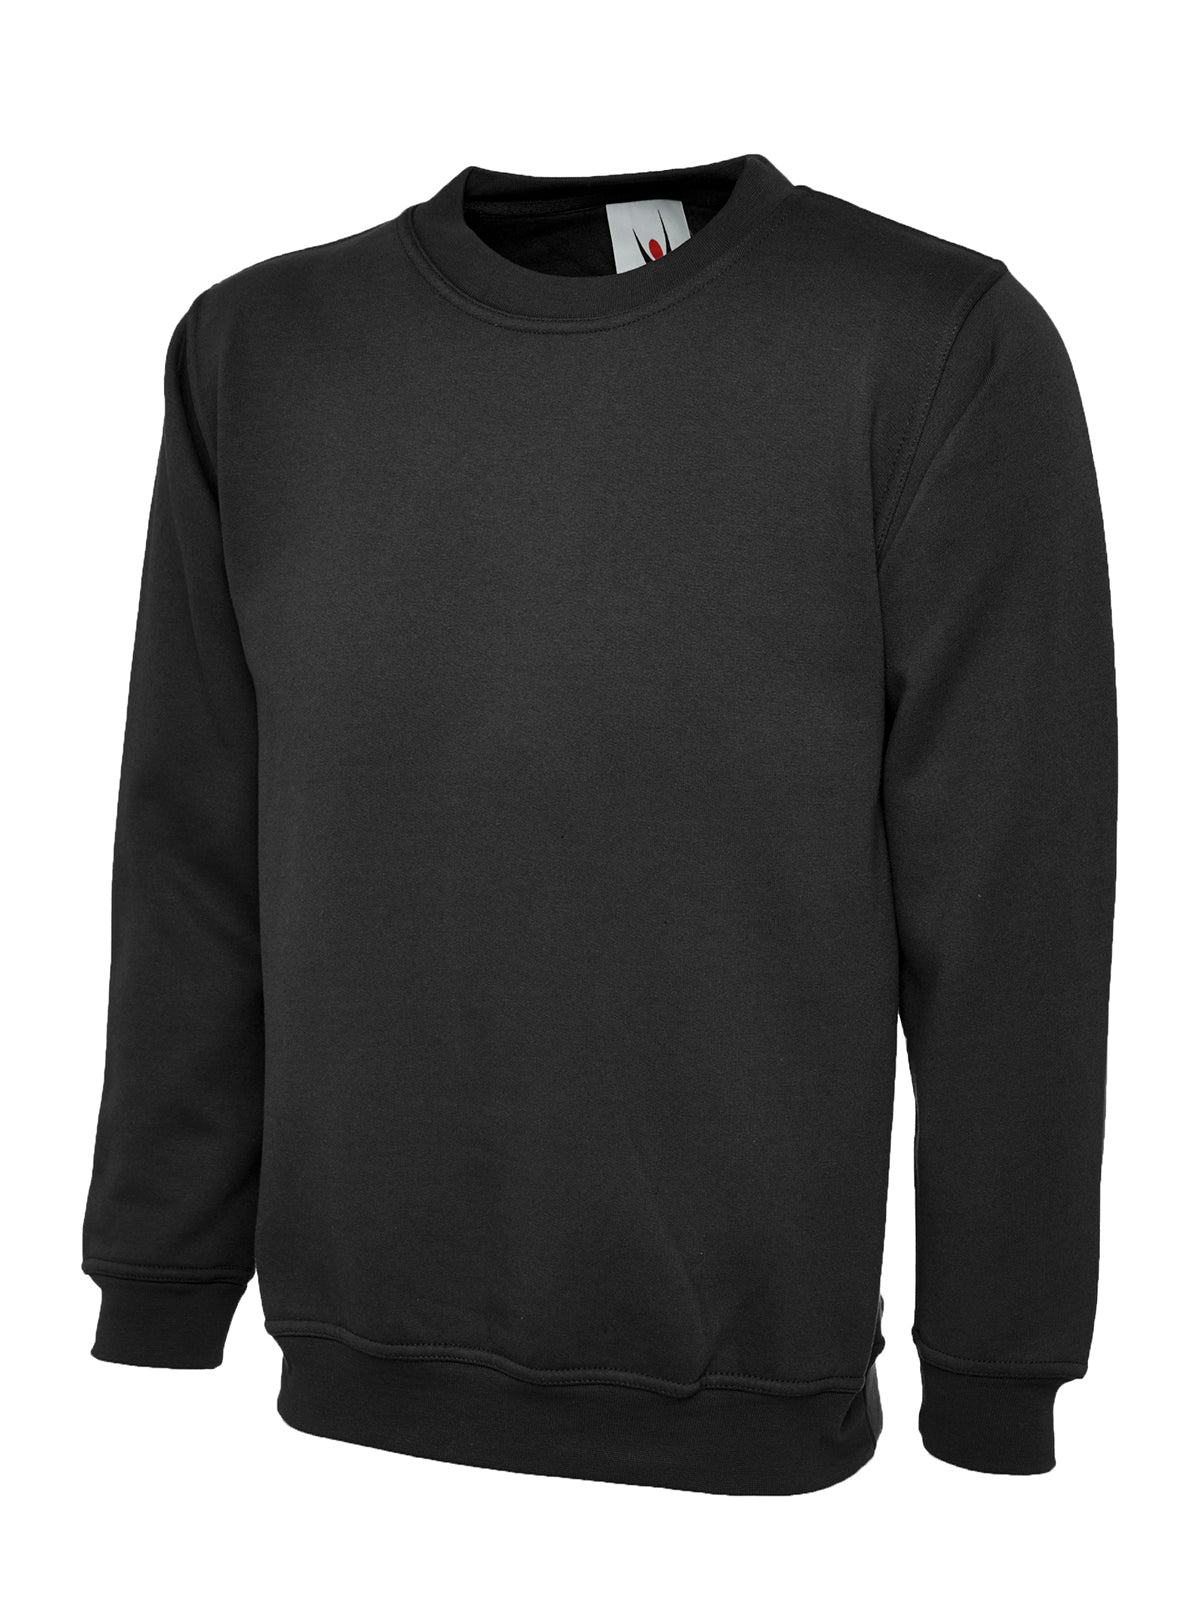 Uneek Premium Unisex Sweatshirt UC201 - Black